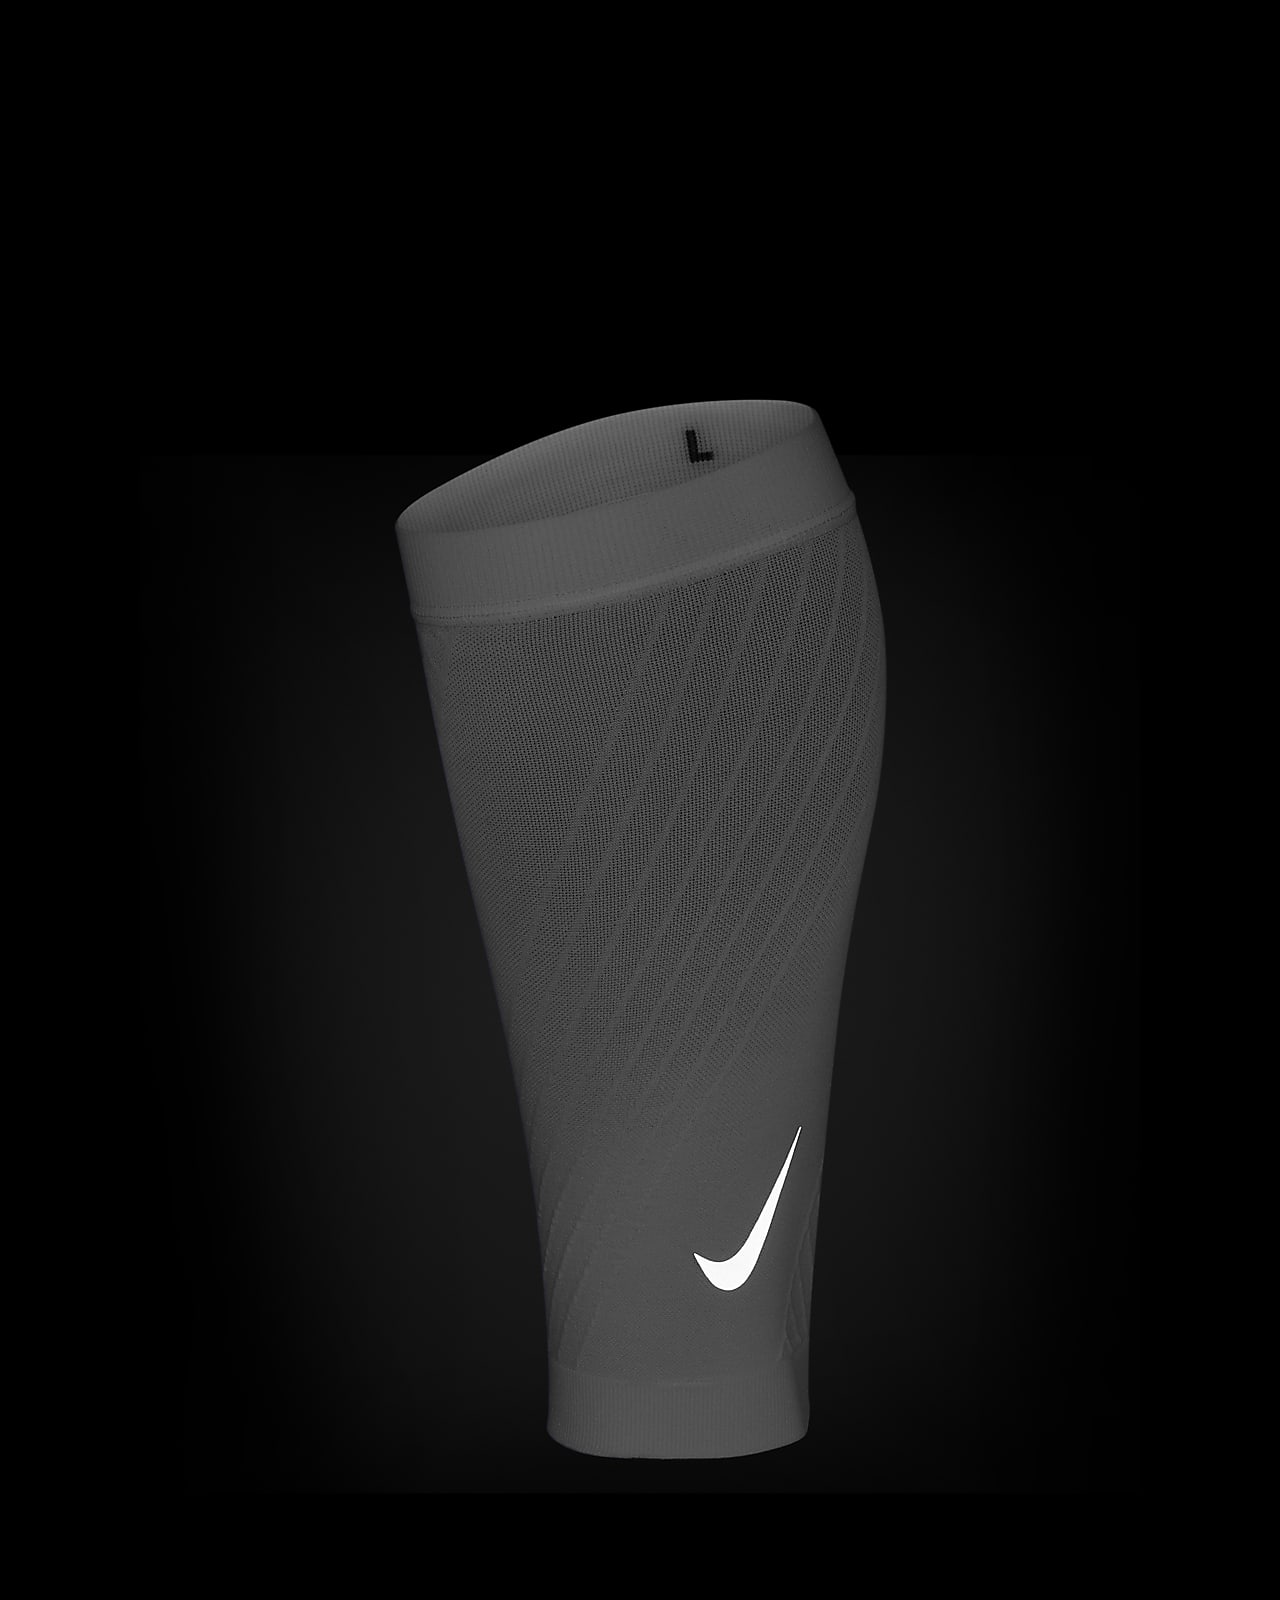 Nike Pro Strong Leg Sleeves (S, M) (Black/White) 